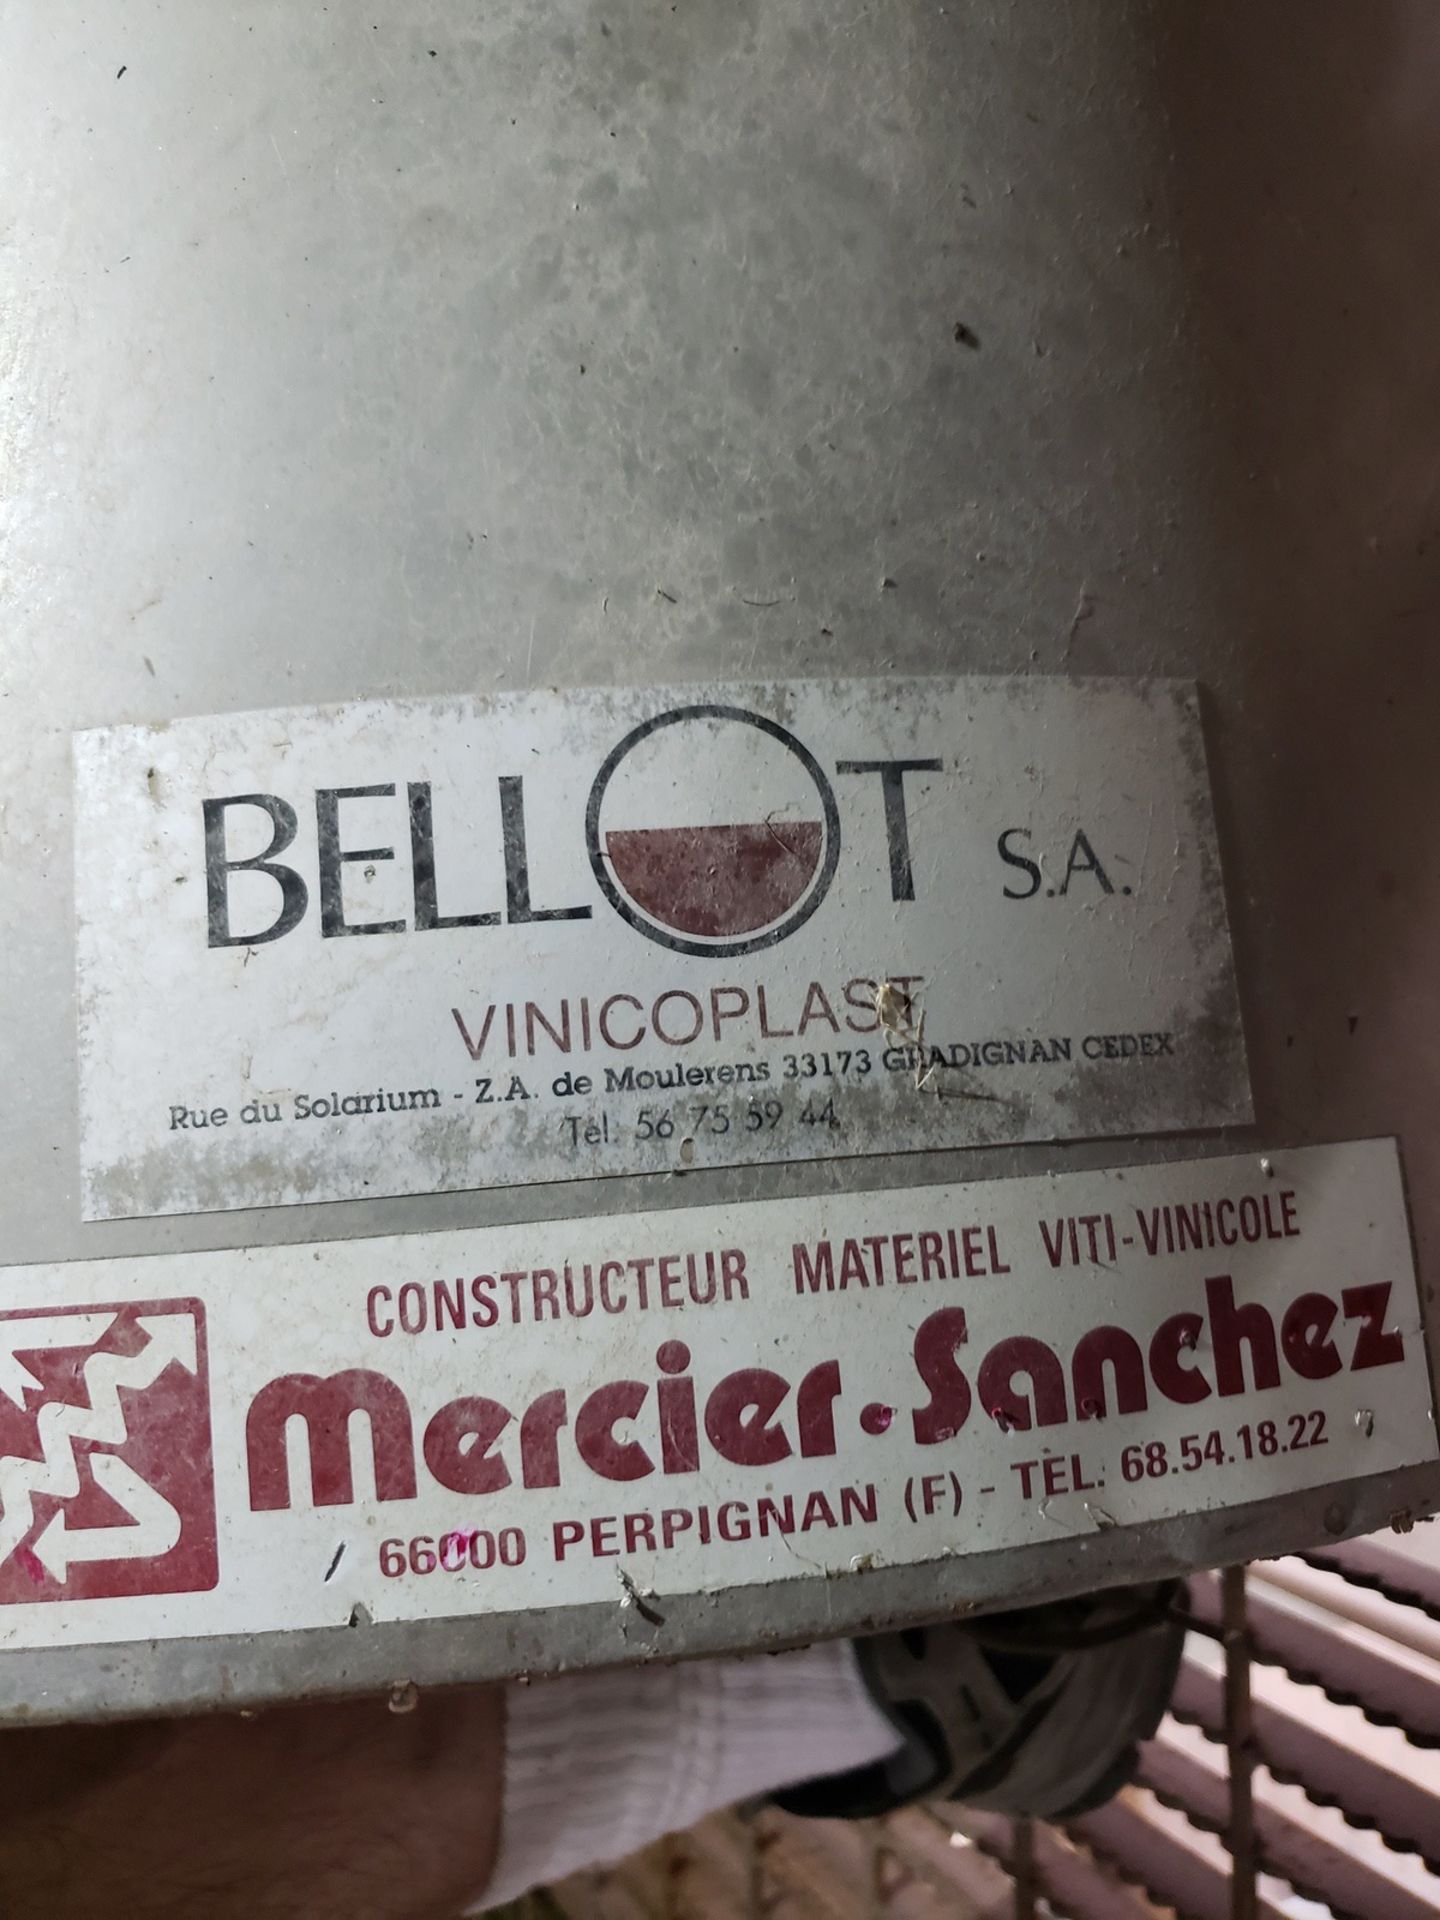 Mercier-Sanchez/Bellot Tumbling Sieve Separator | Rig Fee $300 - Image 3 of 3